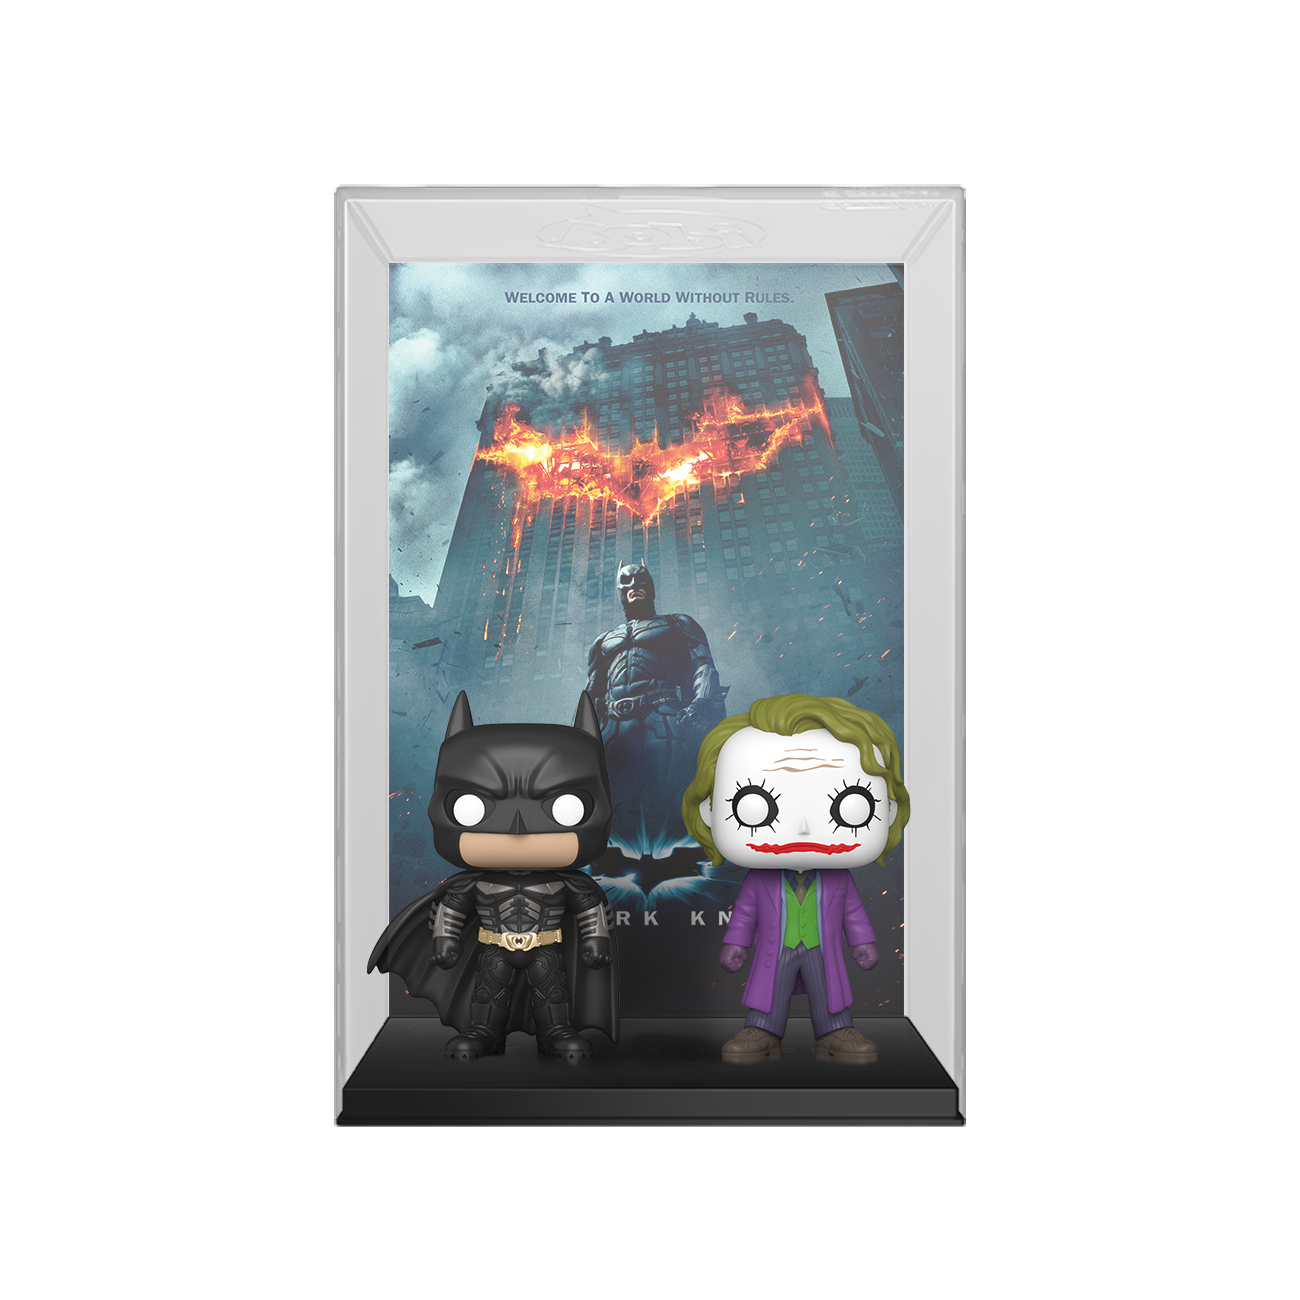 https://media.gamestop.com/i/gamestop/20002620/Funko-POP-Movie-Poster-The-Dark-Knight-Batman-and-The-Joker-Vinyl-Figure-2-Pack-Set-with-Poster?$pdp$